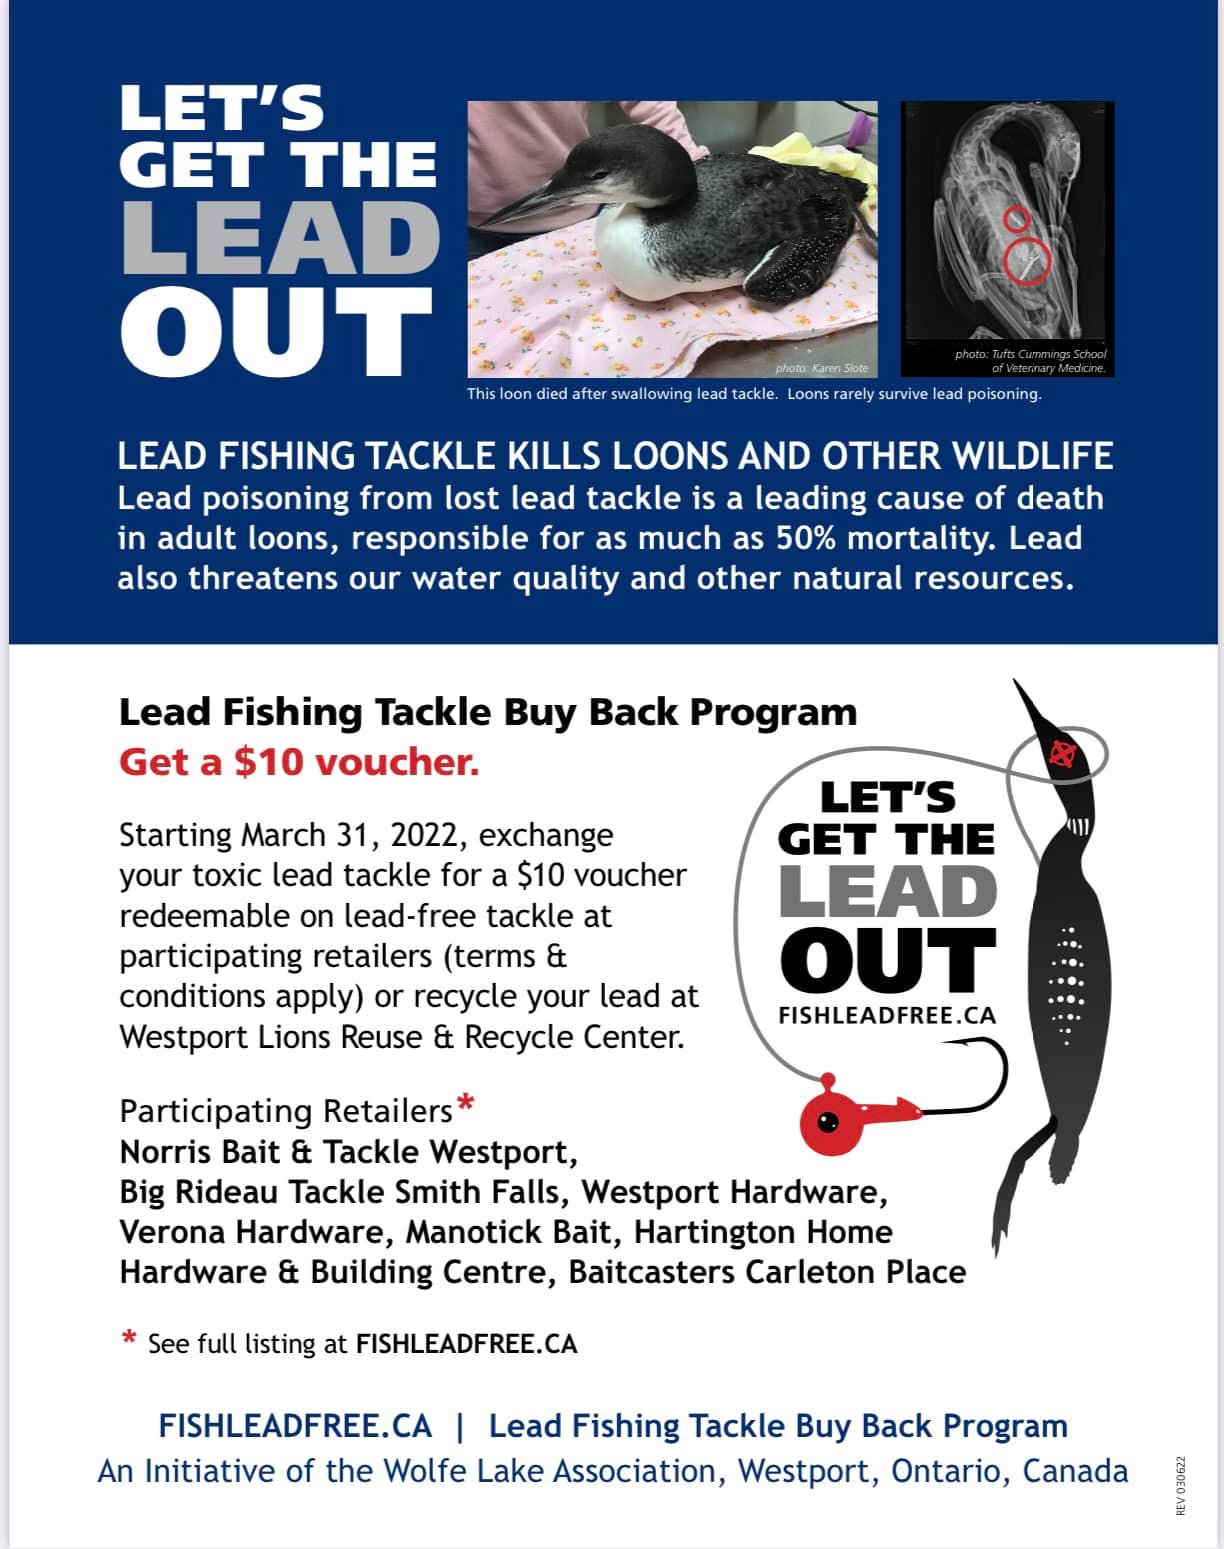 Wolfe Lake Association's Lead Fishing Tackle Buy Back Program